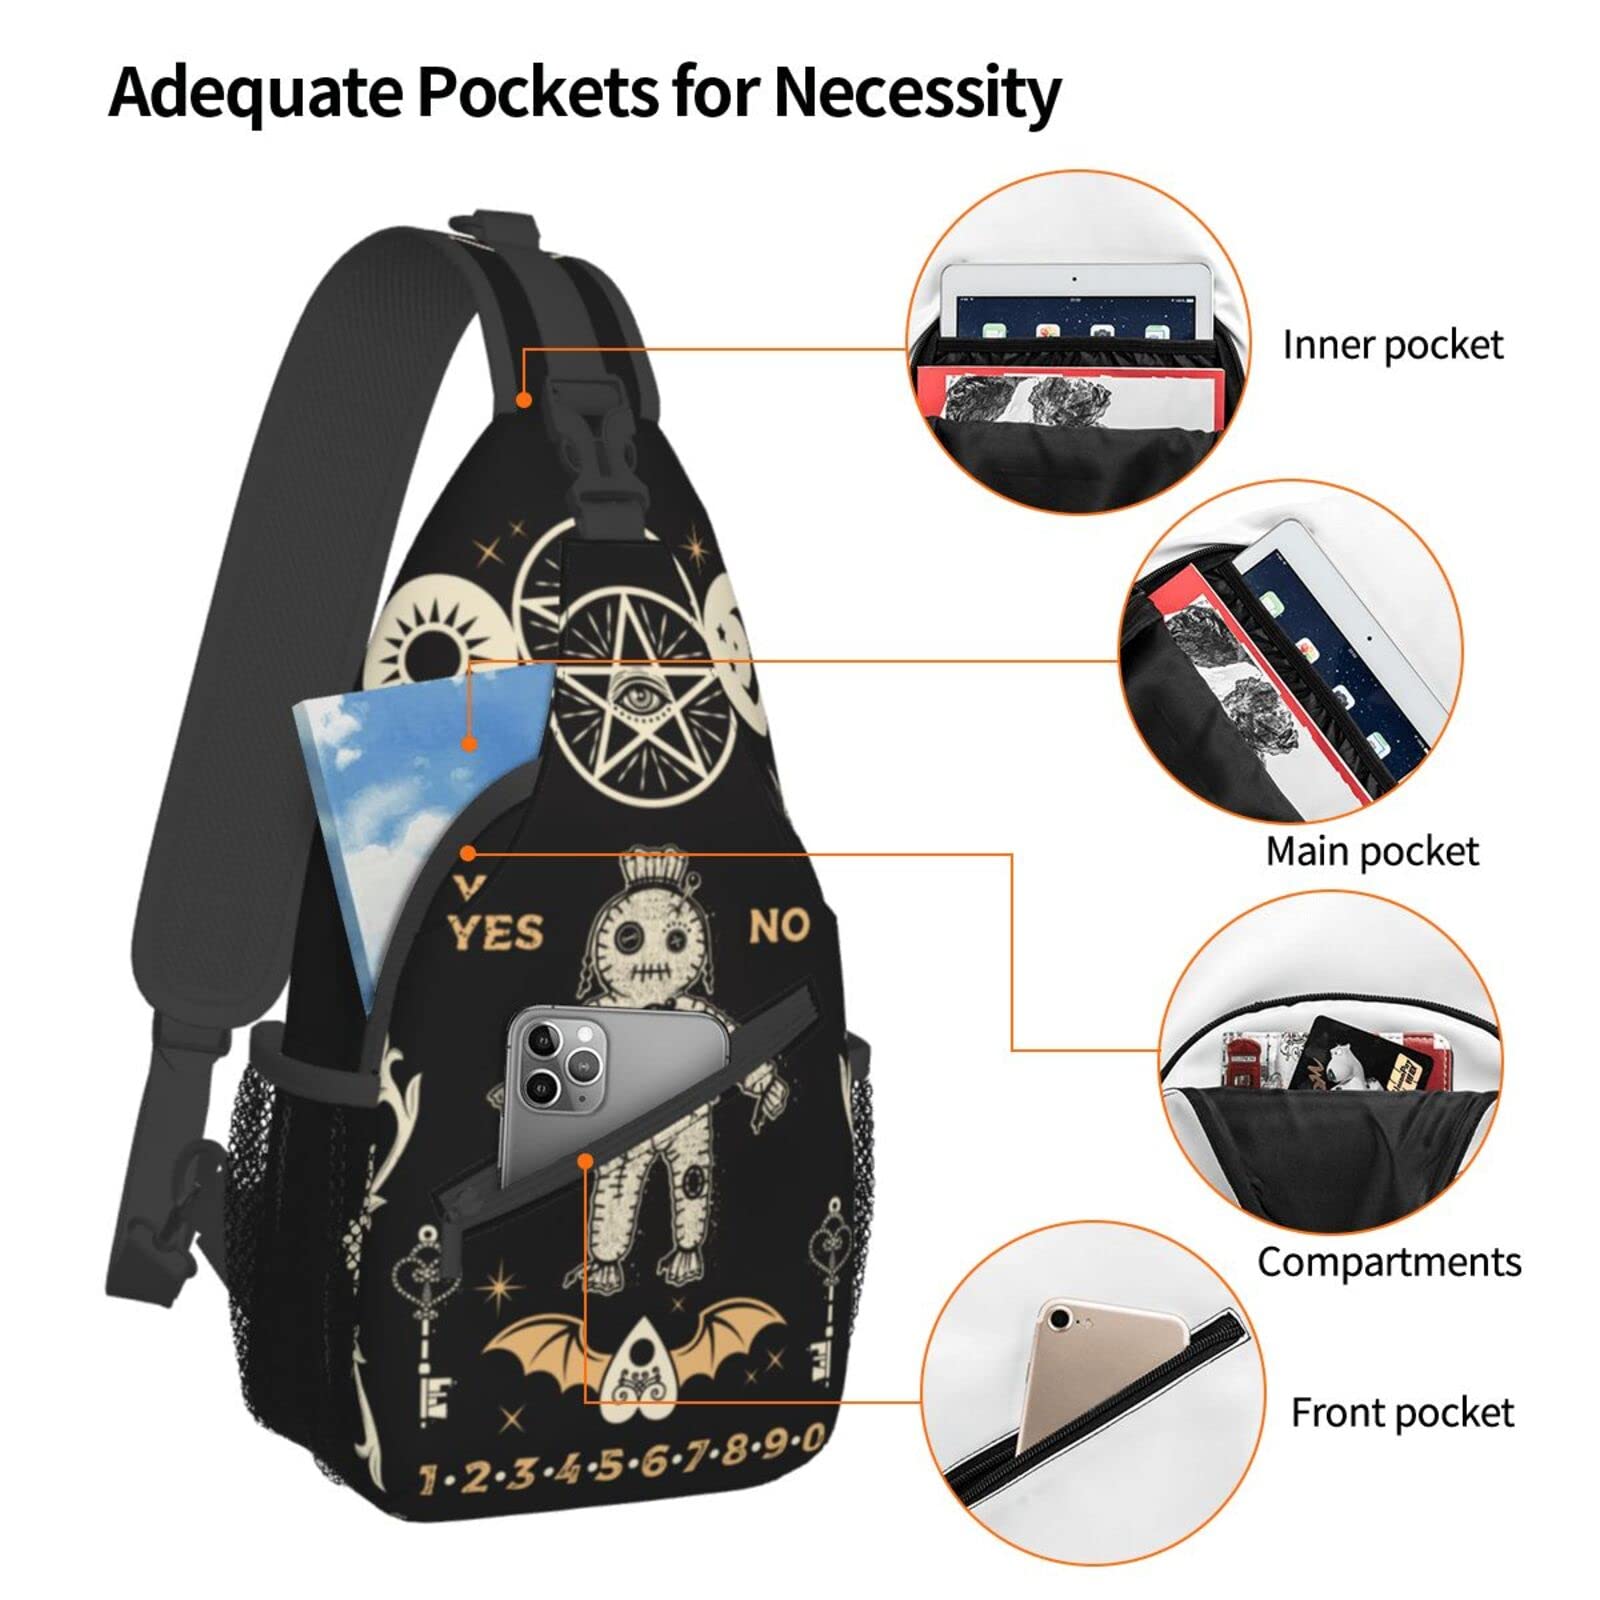 BCQJNB Goth Coffin Horror Gothic Sling Backpack Crossbody Shoulder Bag Travel Hiking Daypack Gifts